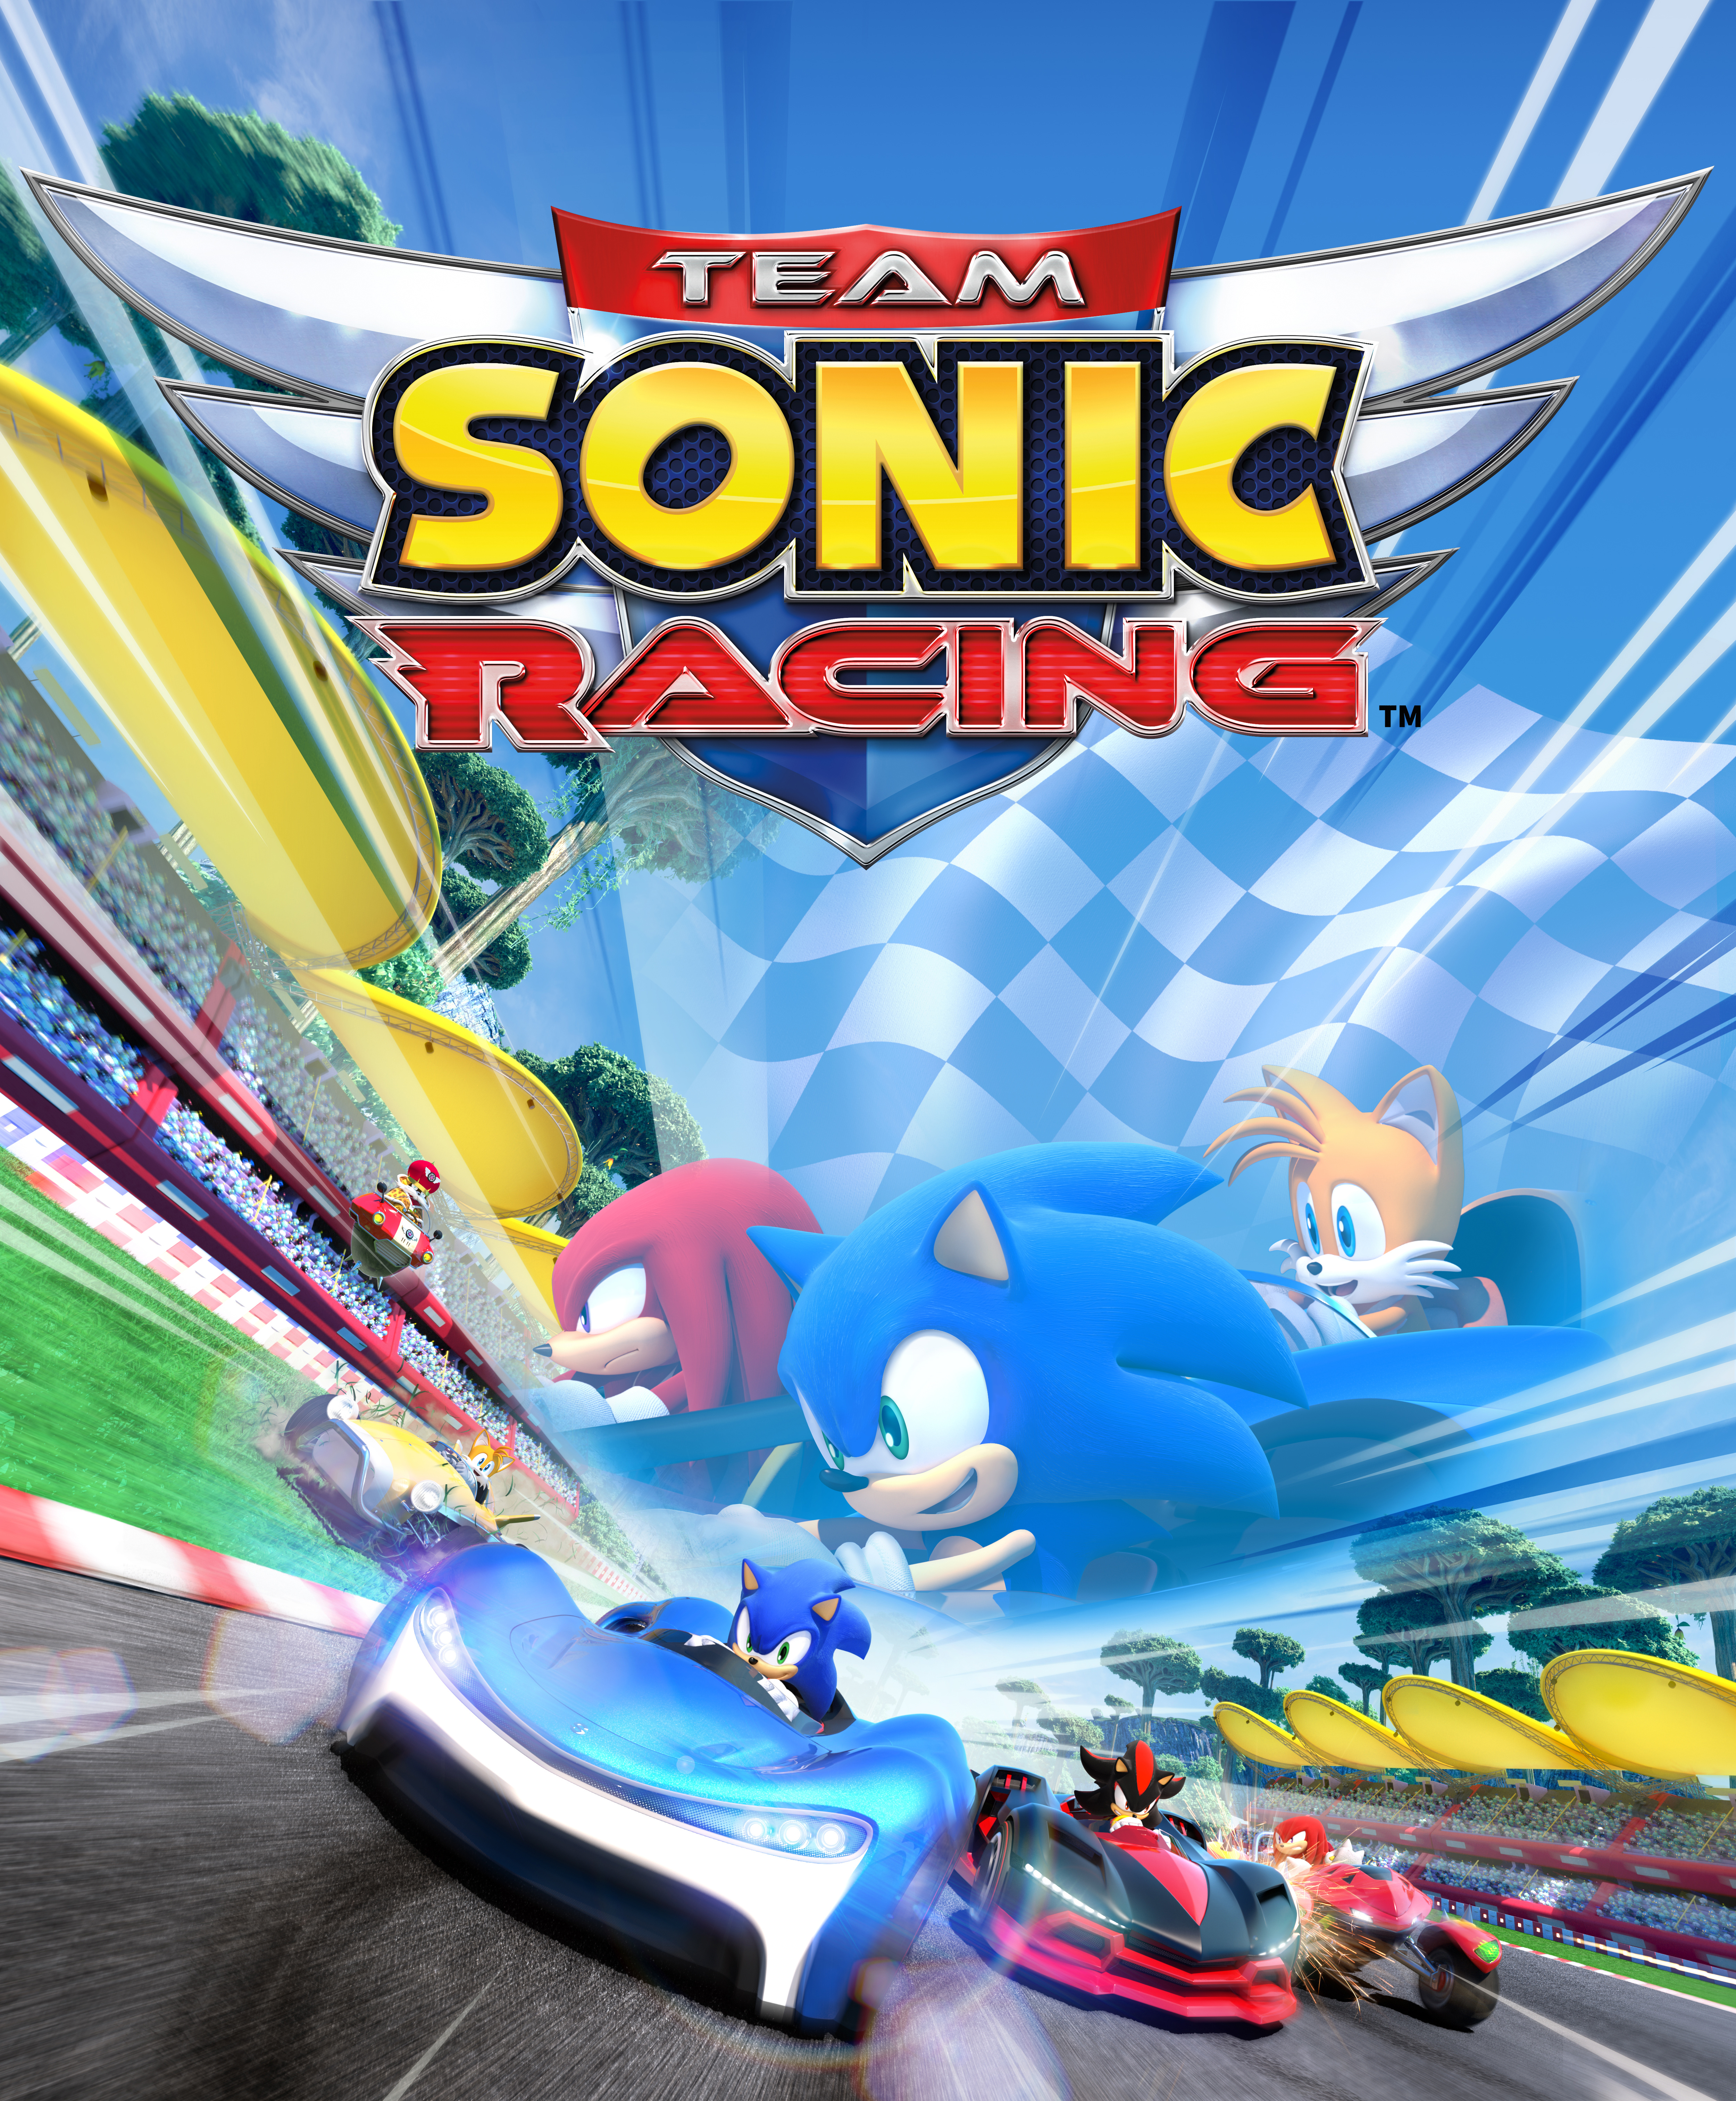 is team sonic racing good